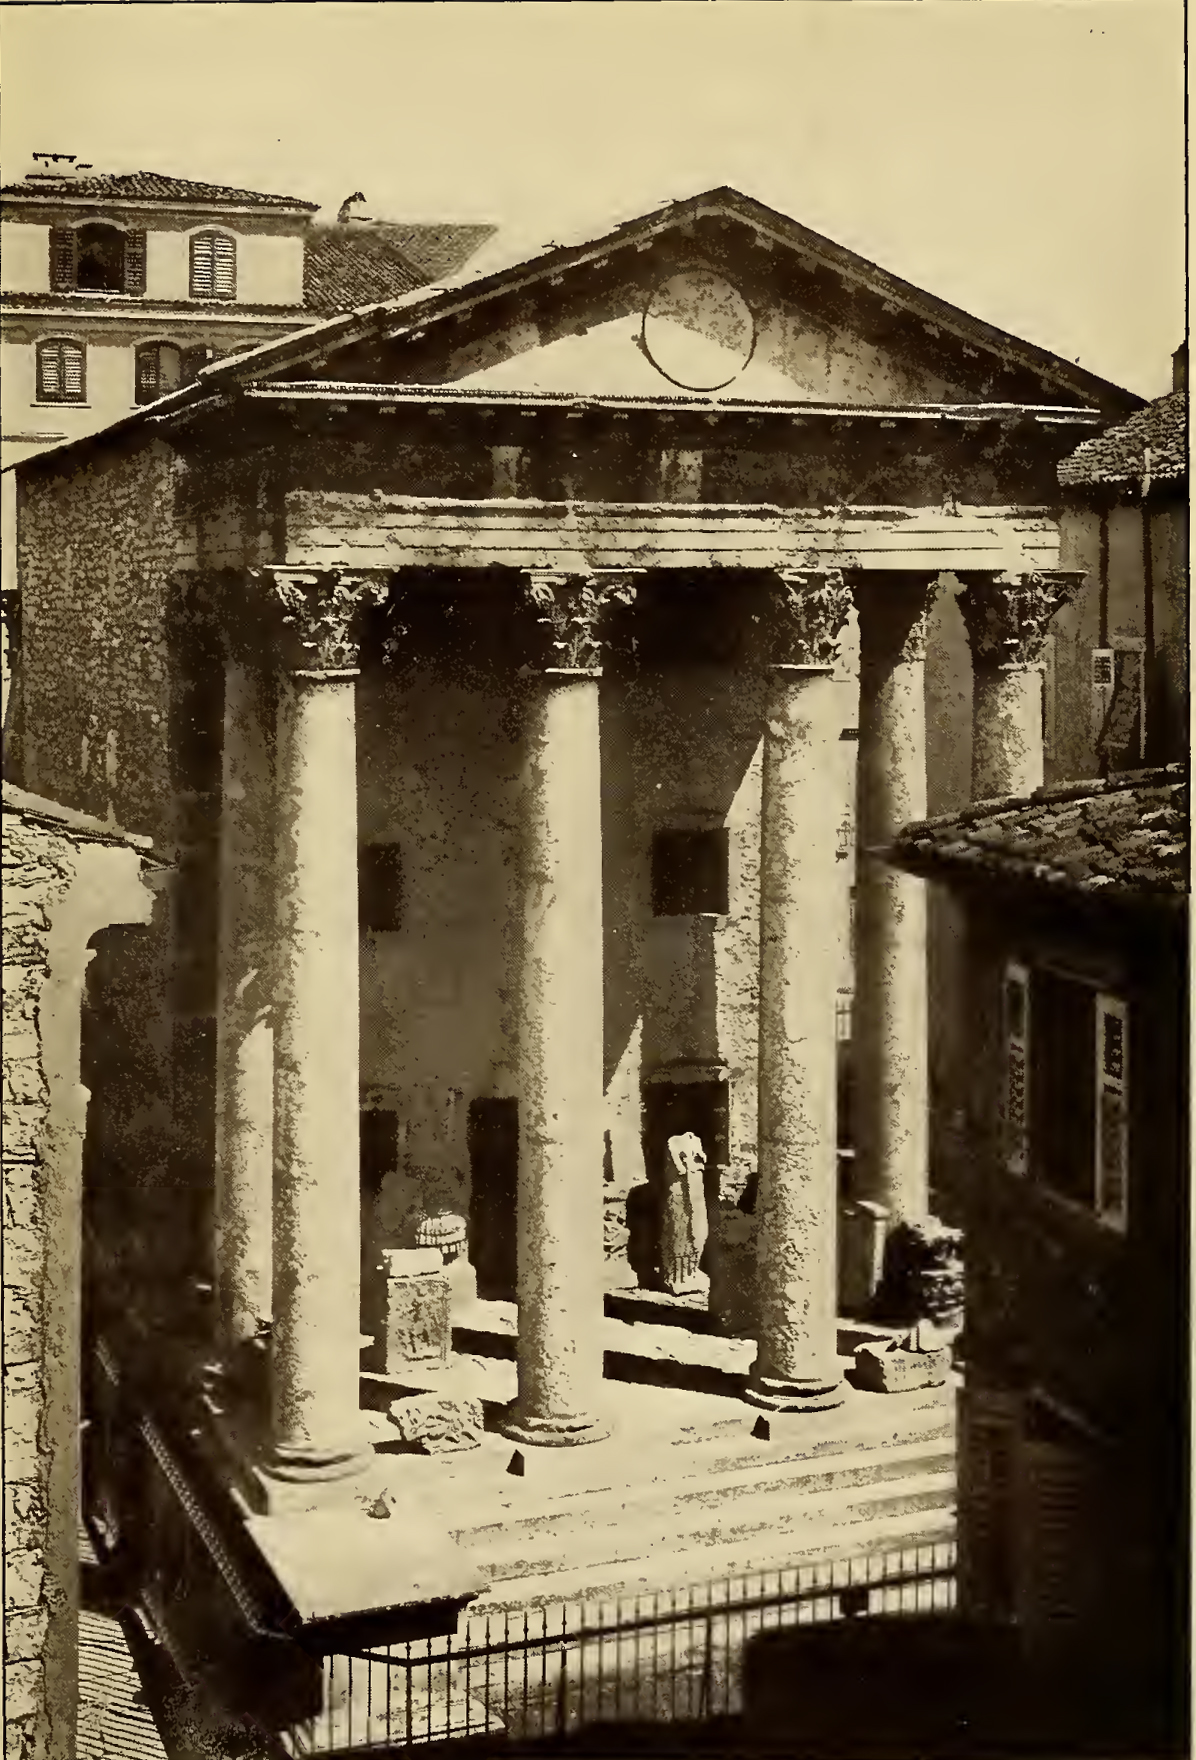 Columned facade of Roman temple. Caption: Pola Temple of Augustus.